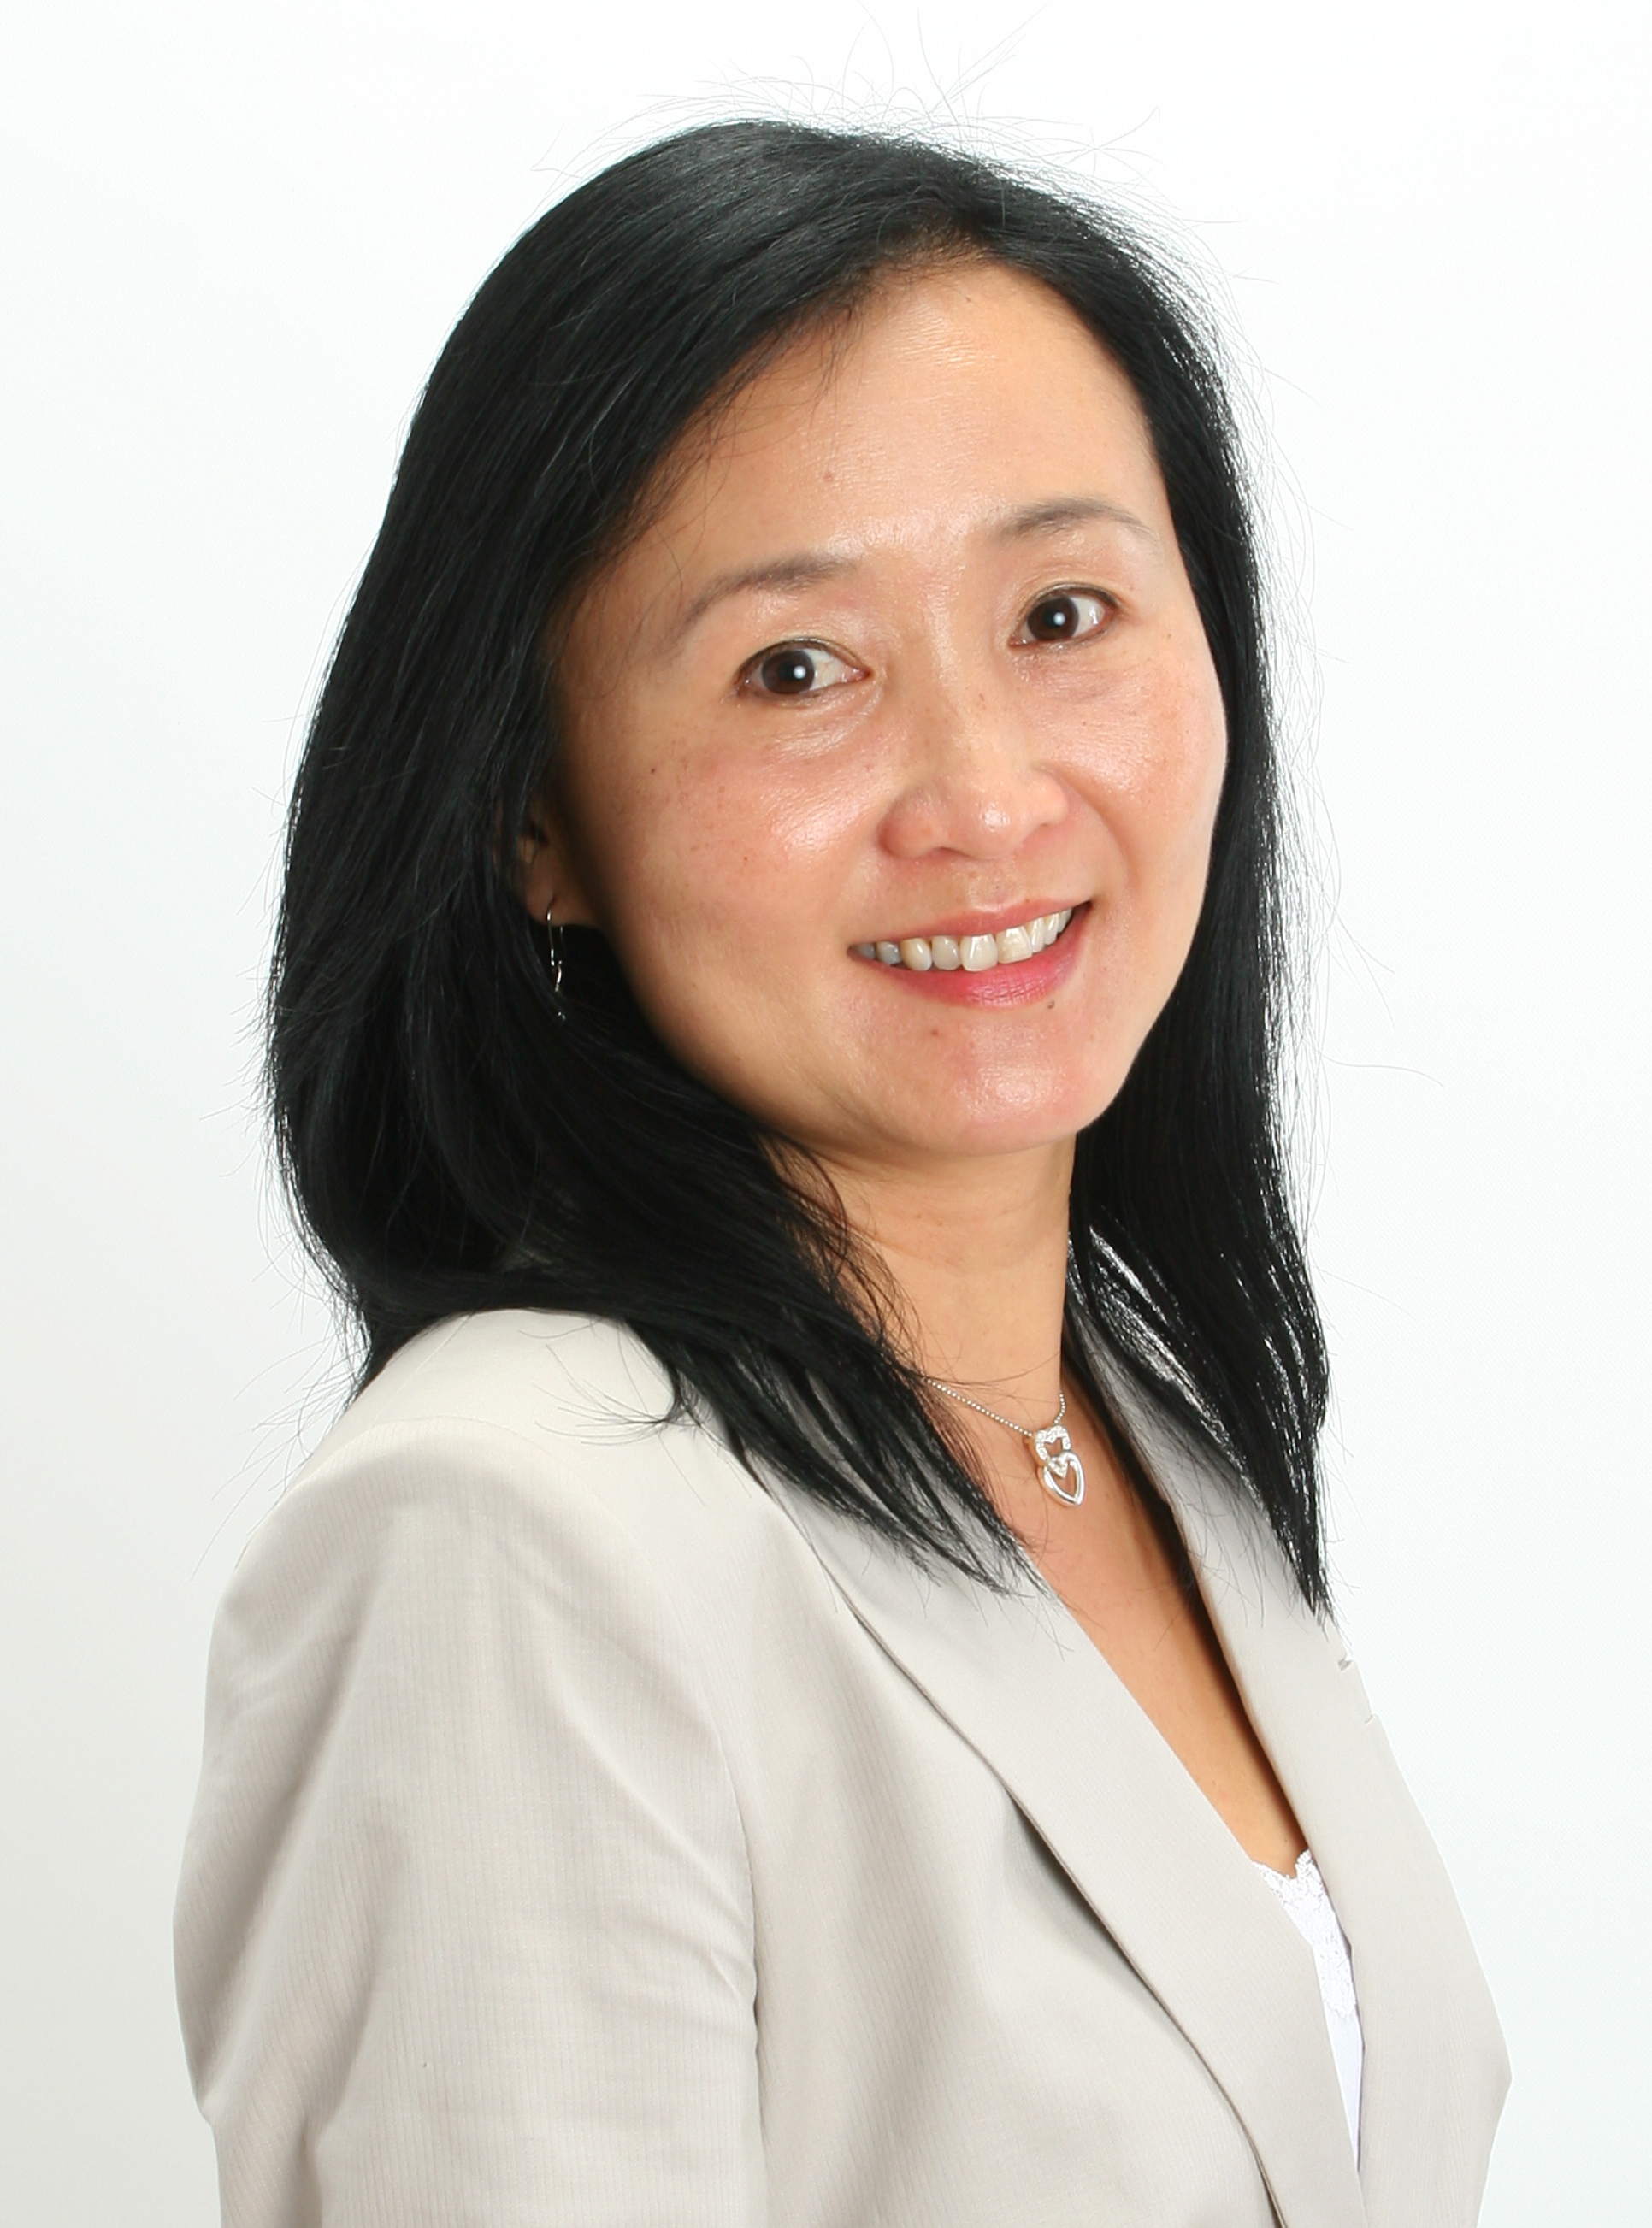 Susan Tan, research vice president at Gartner